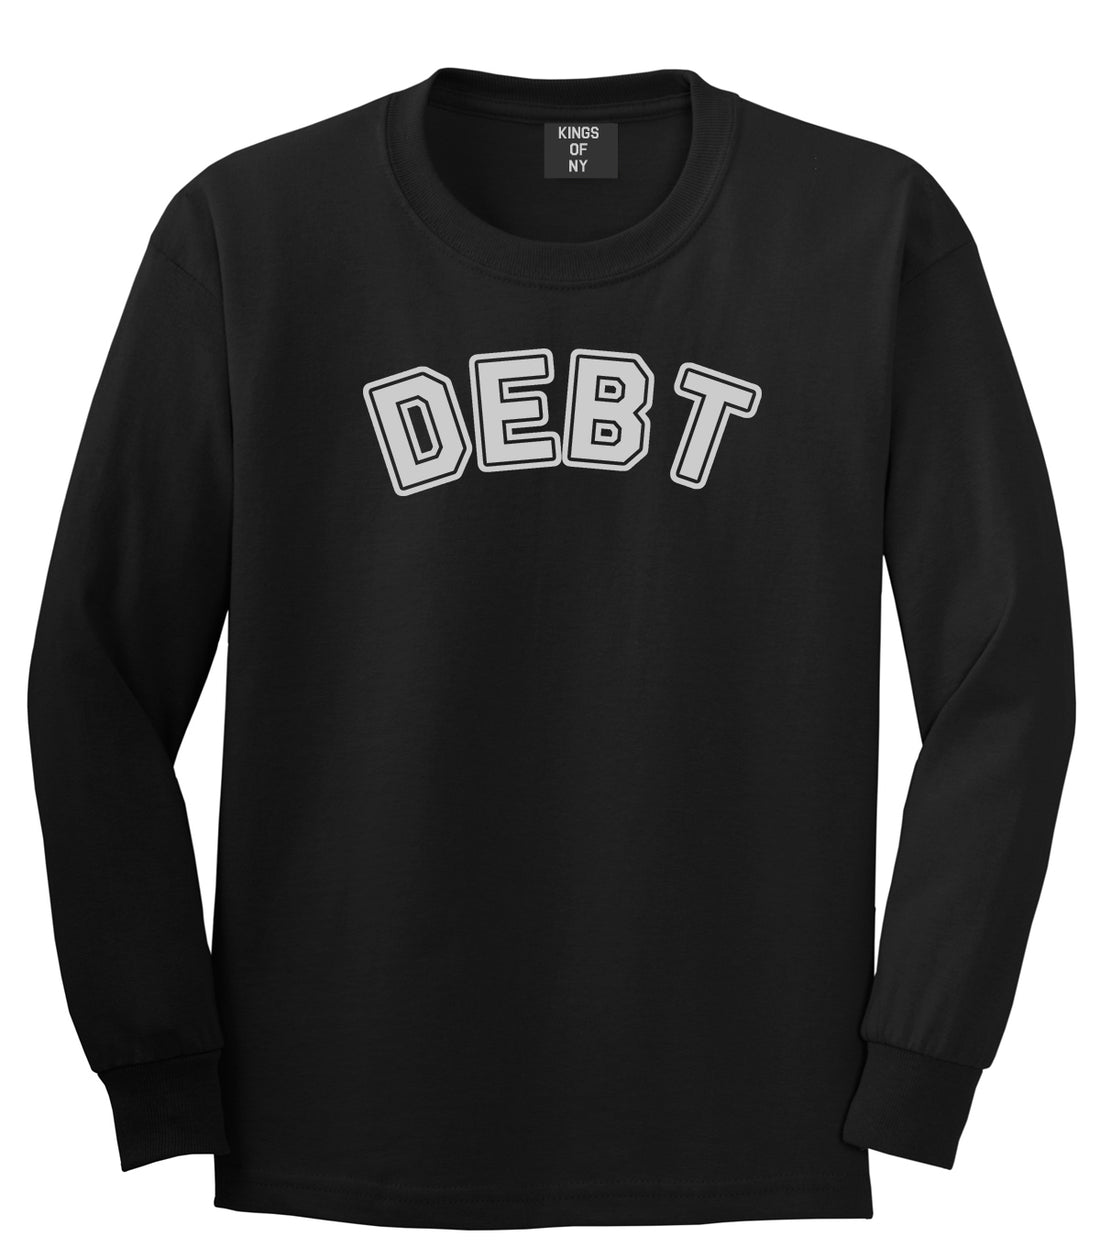 Debt Life Long Sleeve T-Shirt in Black